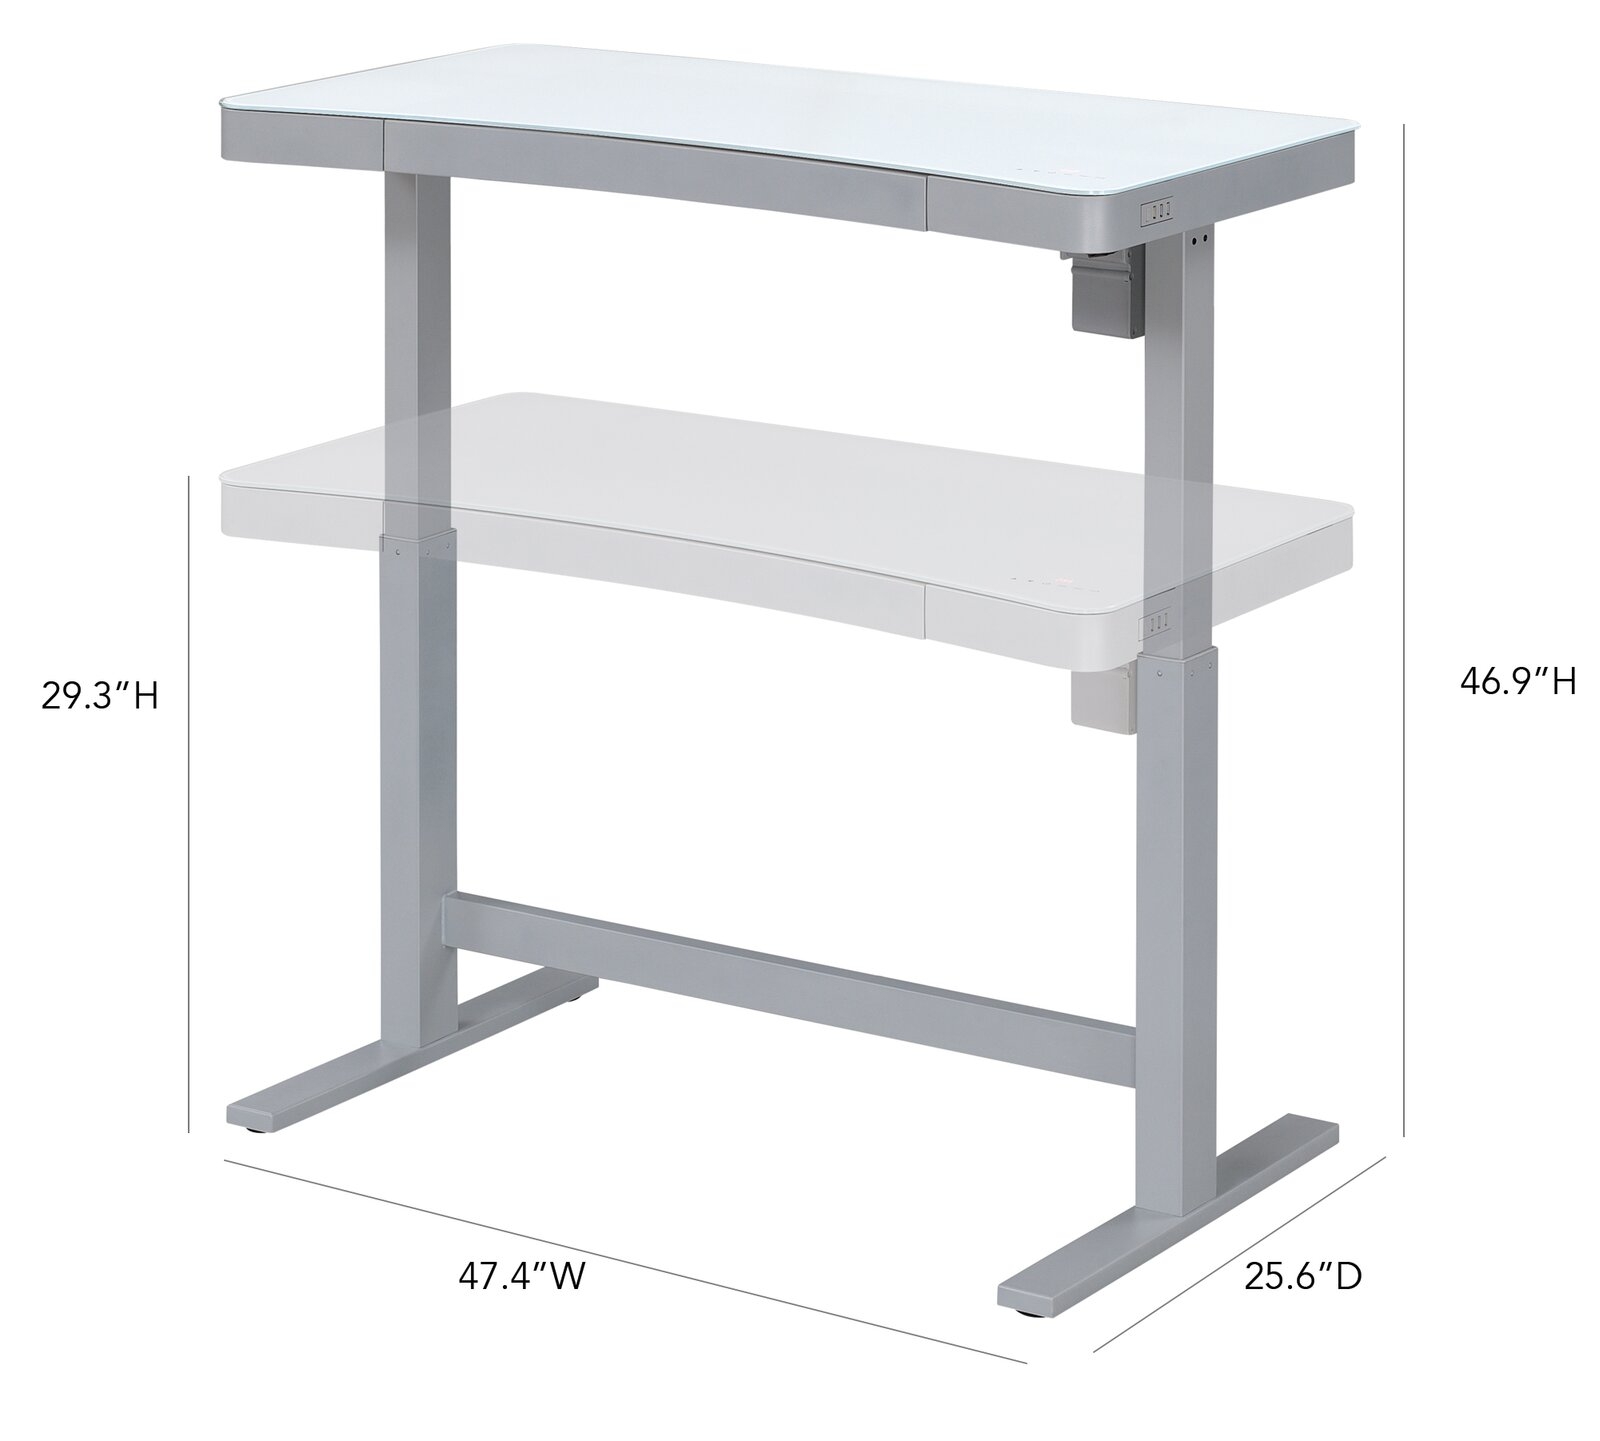 Babin Height Adjustable Standing Desk - Image 3